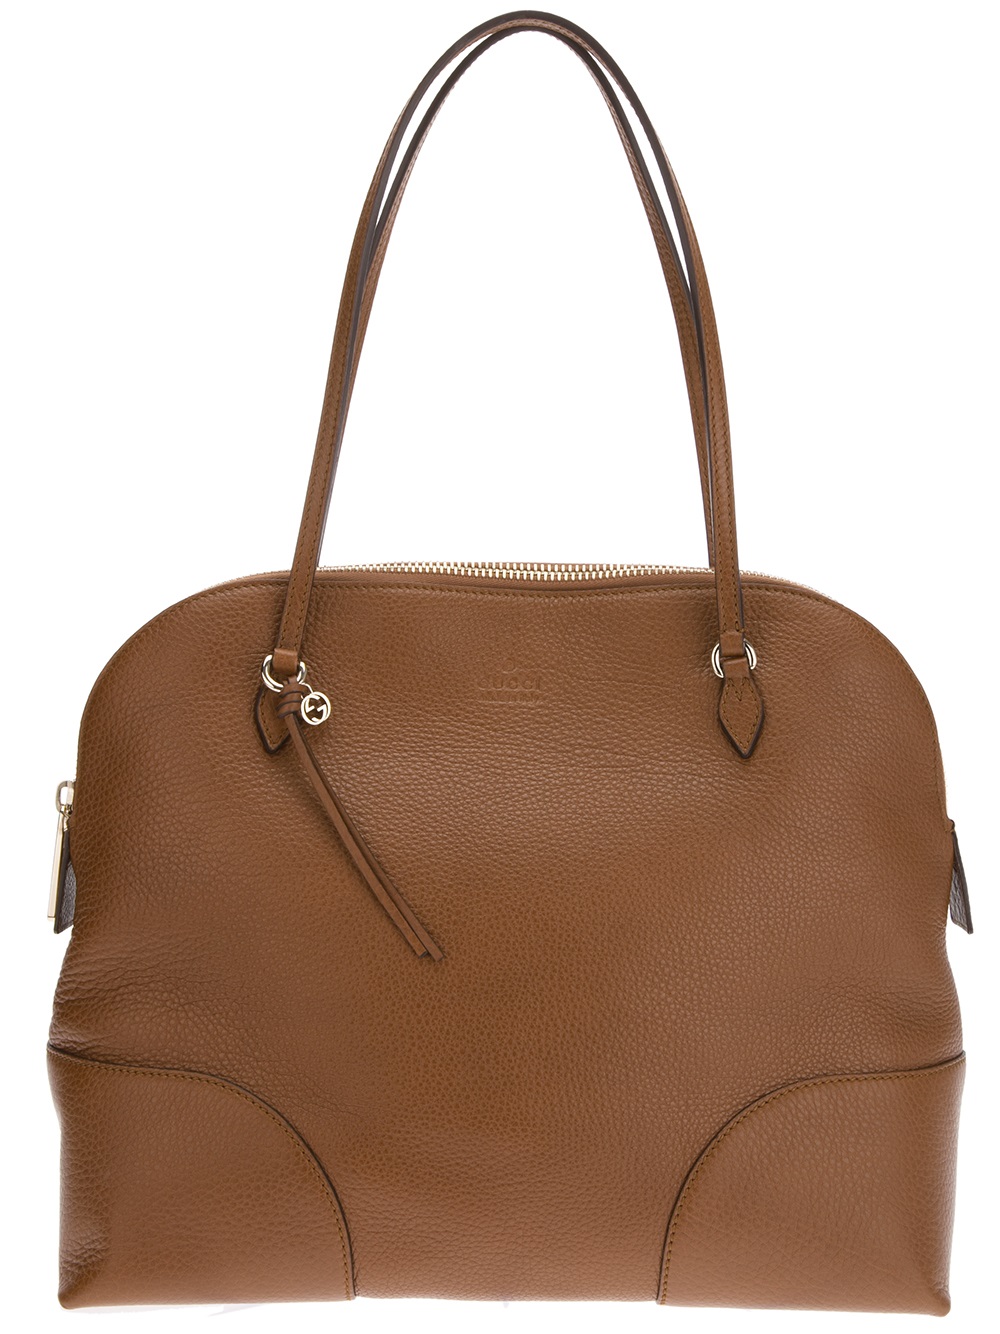 Gucci Medium Shoulder Bag in Brown | Lyst